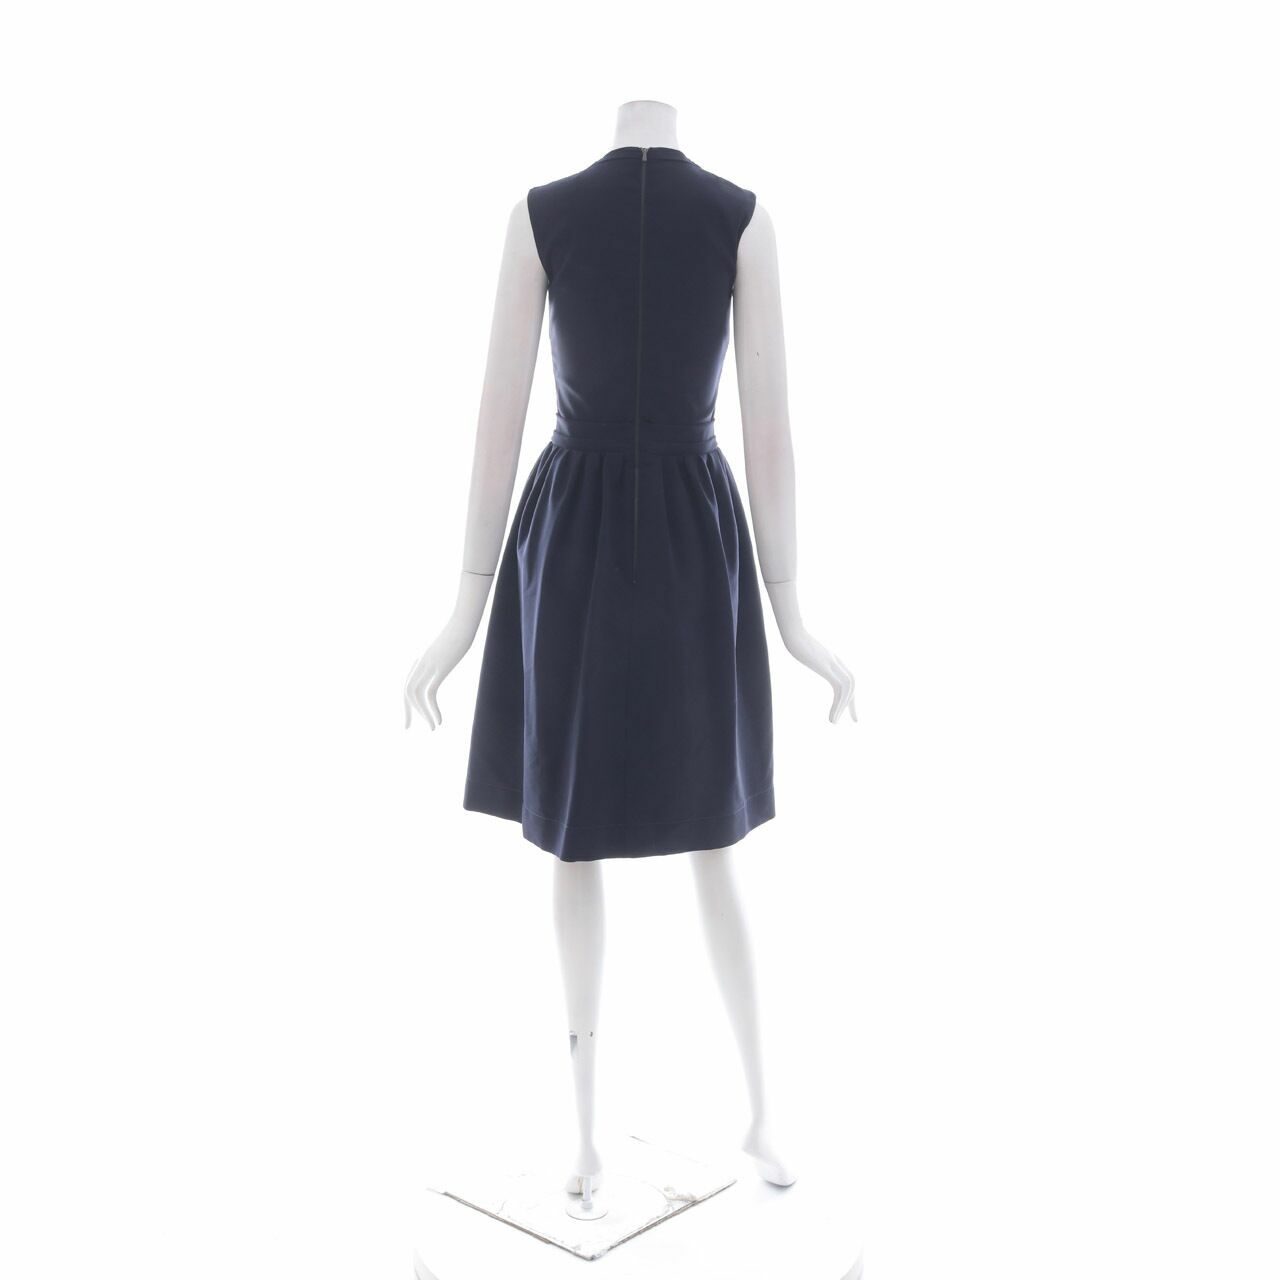 Preen By Thornton Bregazzi Navy with Lace Neon Mini Dress